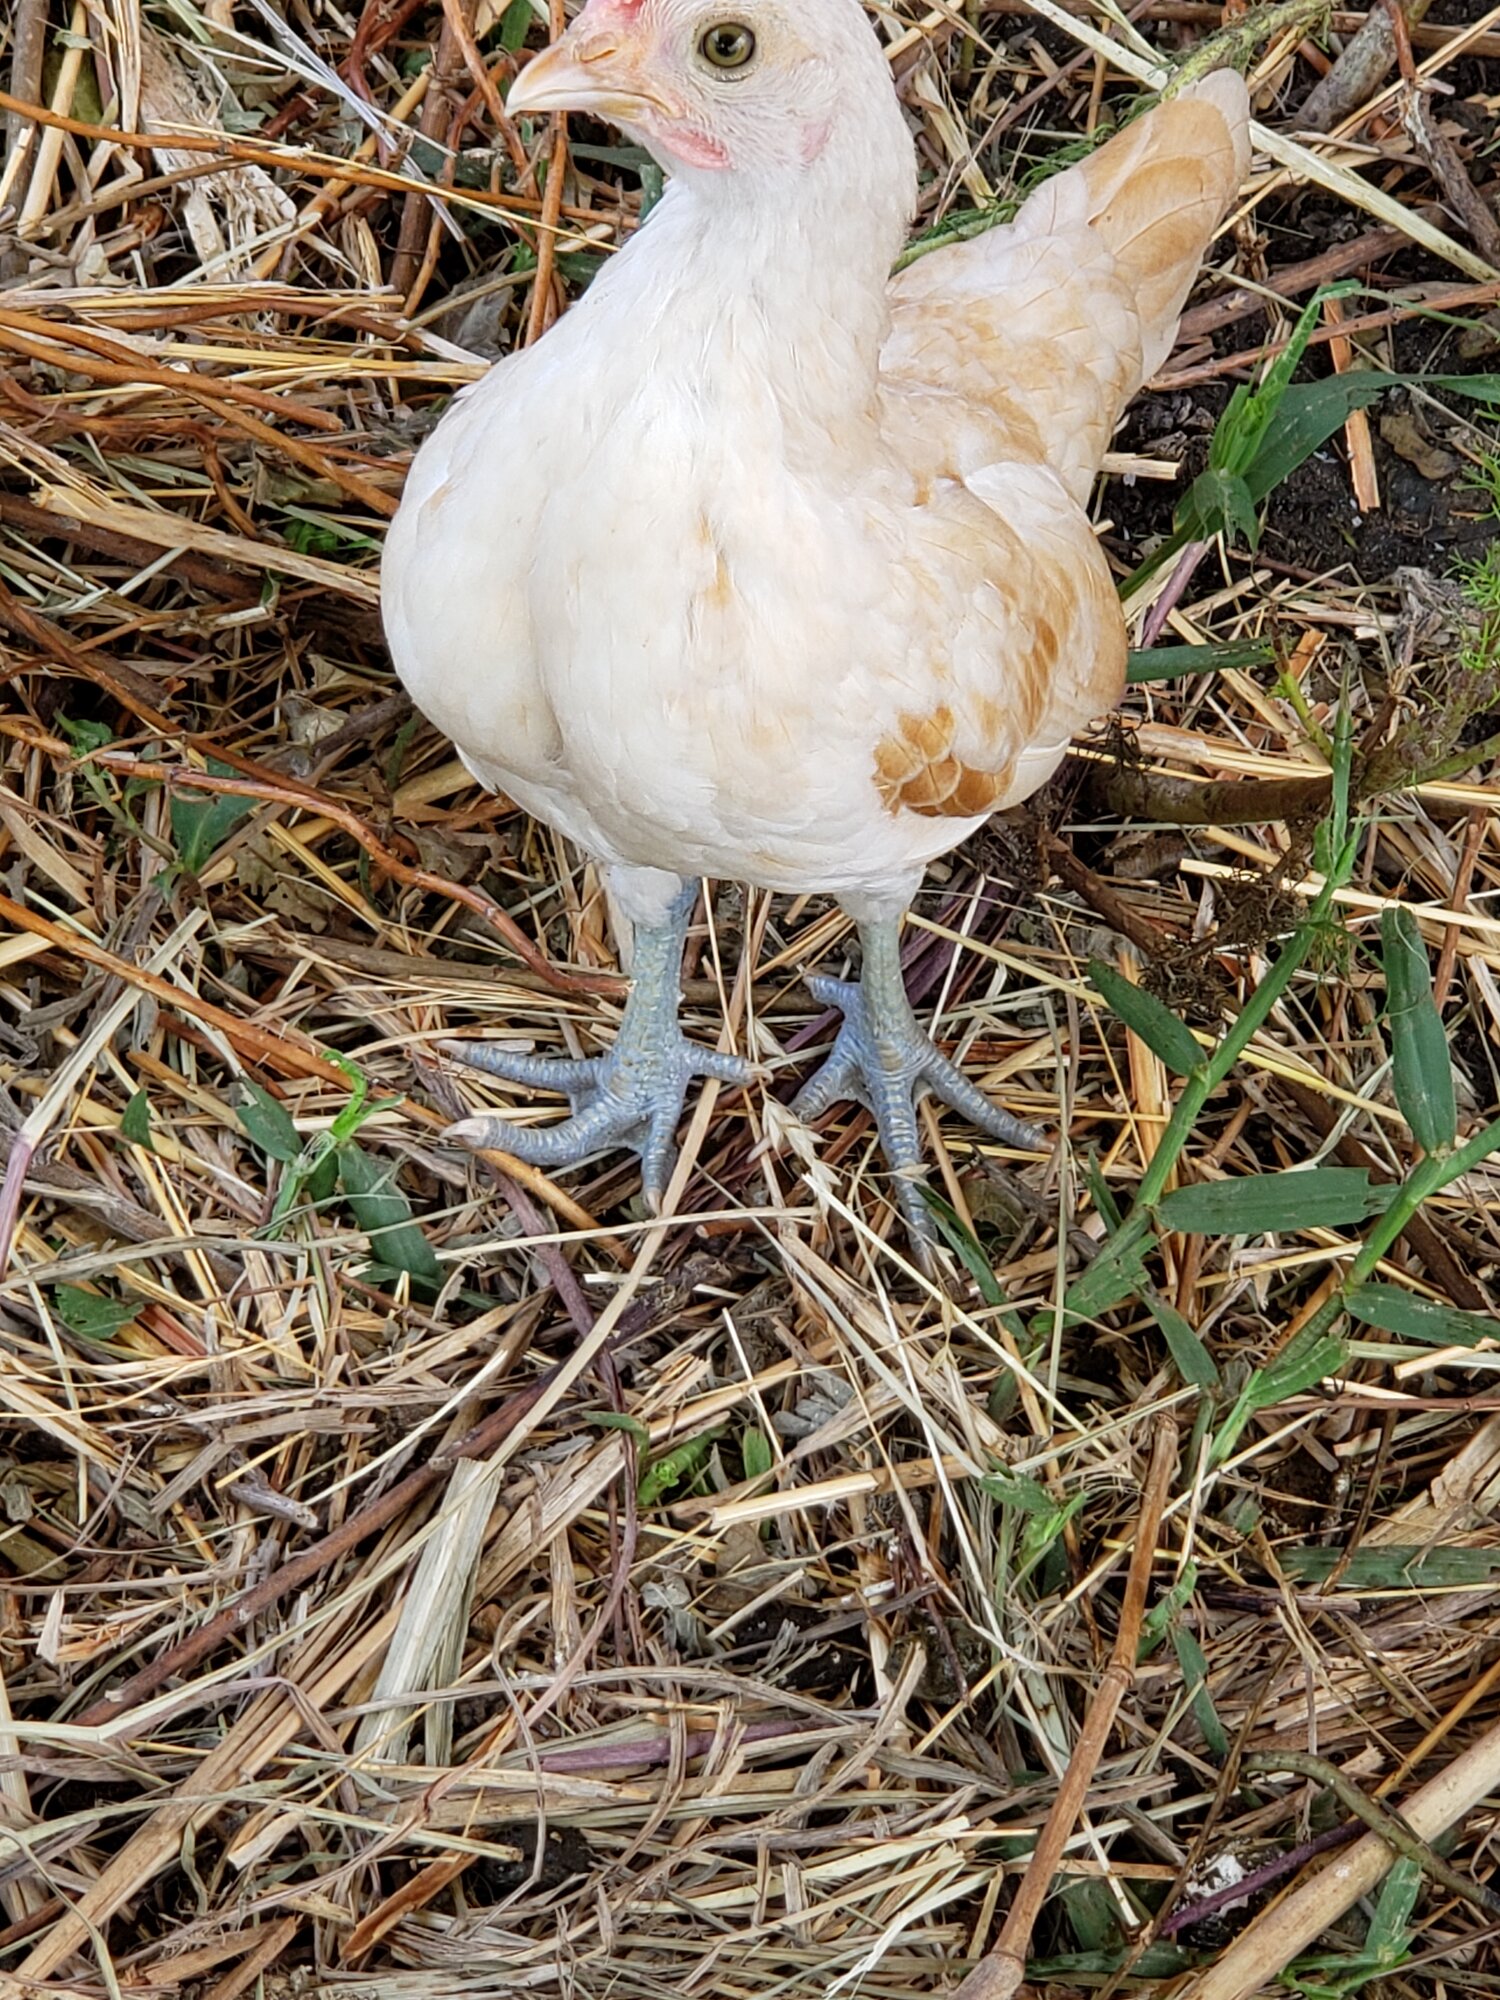 Golden sebright cockerel pic 1